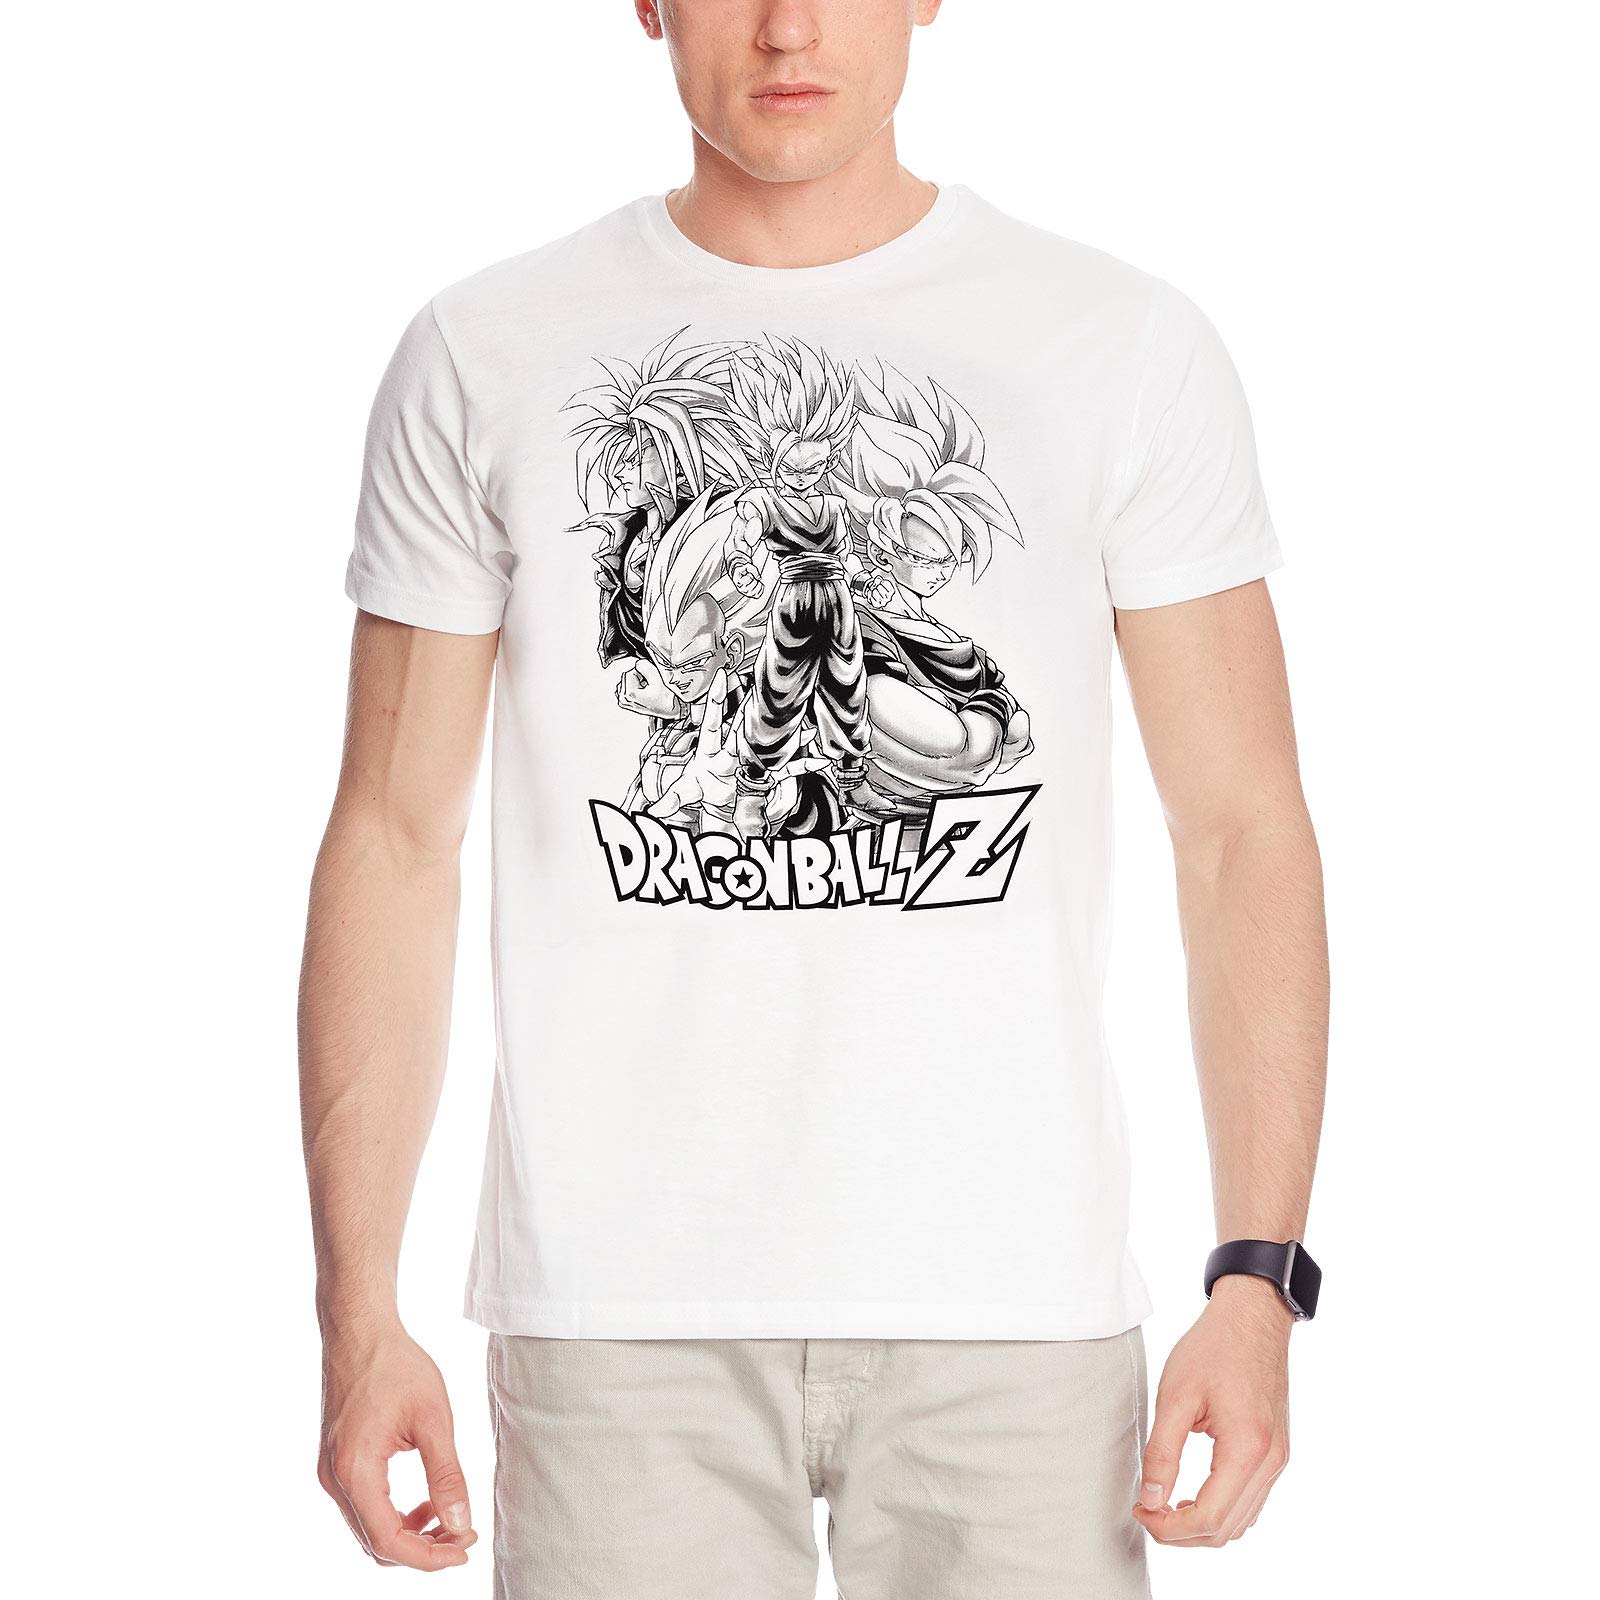 Dragon Ball Z Sayan Group T-Shirt weiß Baumwolle - L